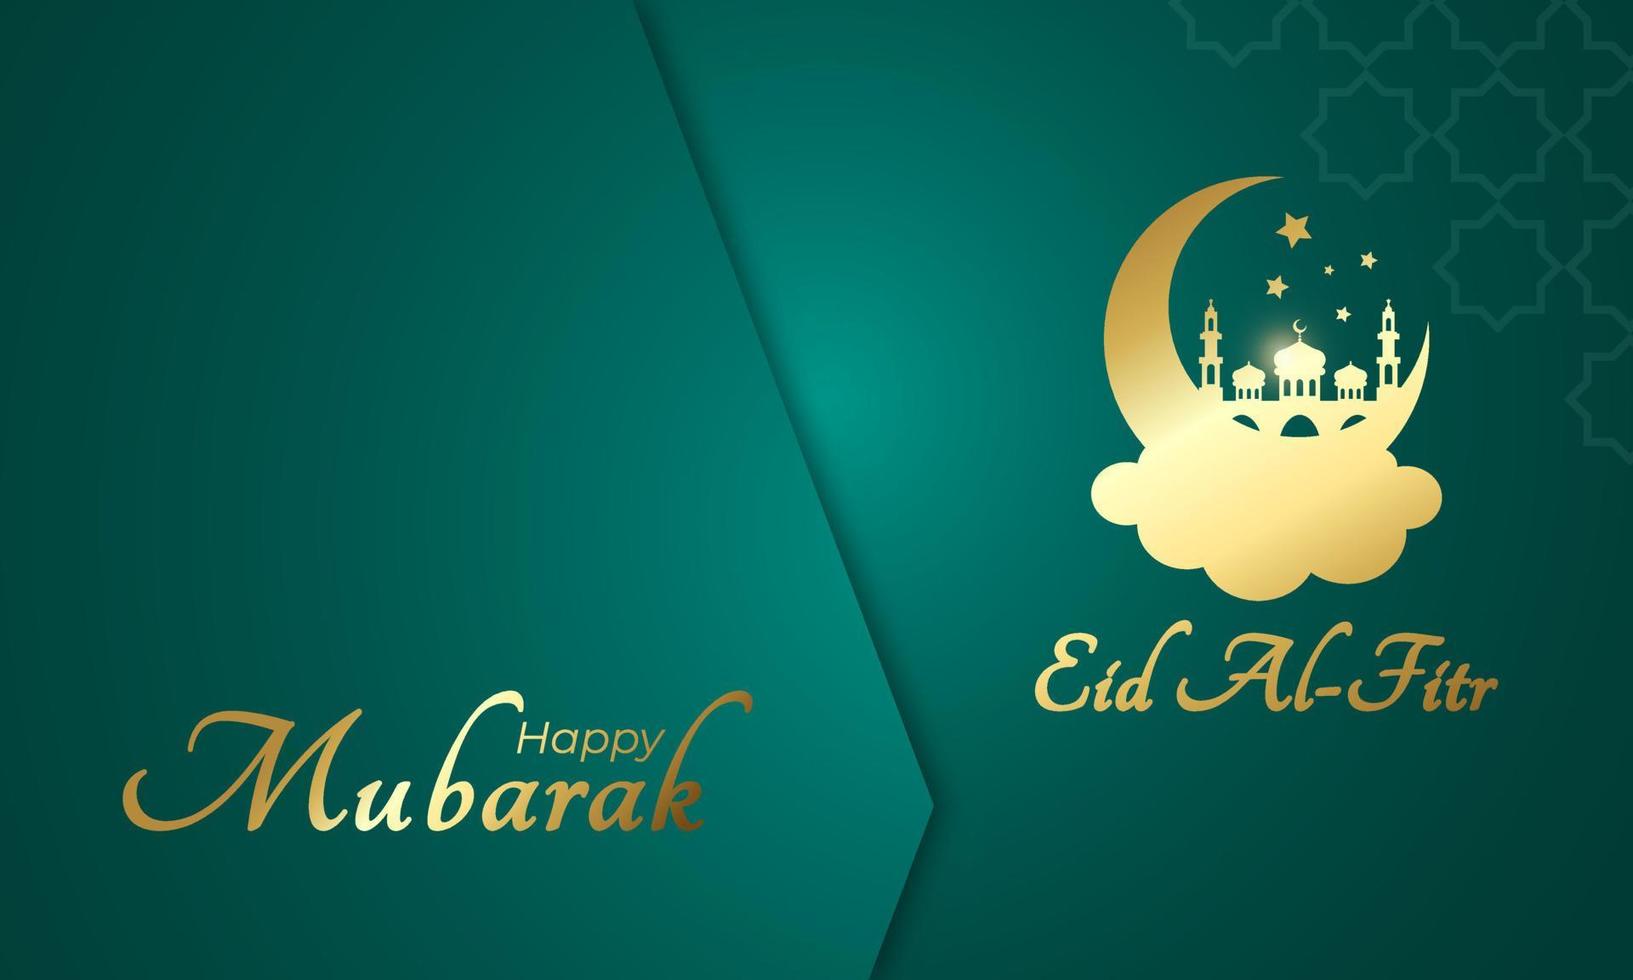 Eid Mubarak Al Fitr Islamic Greeting Card for Holy Month Ramadan Celebration vector